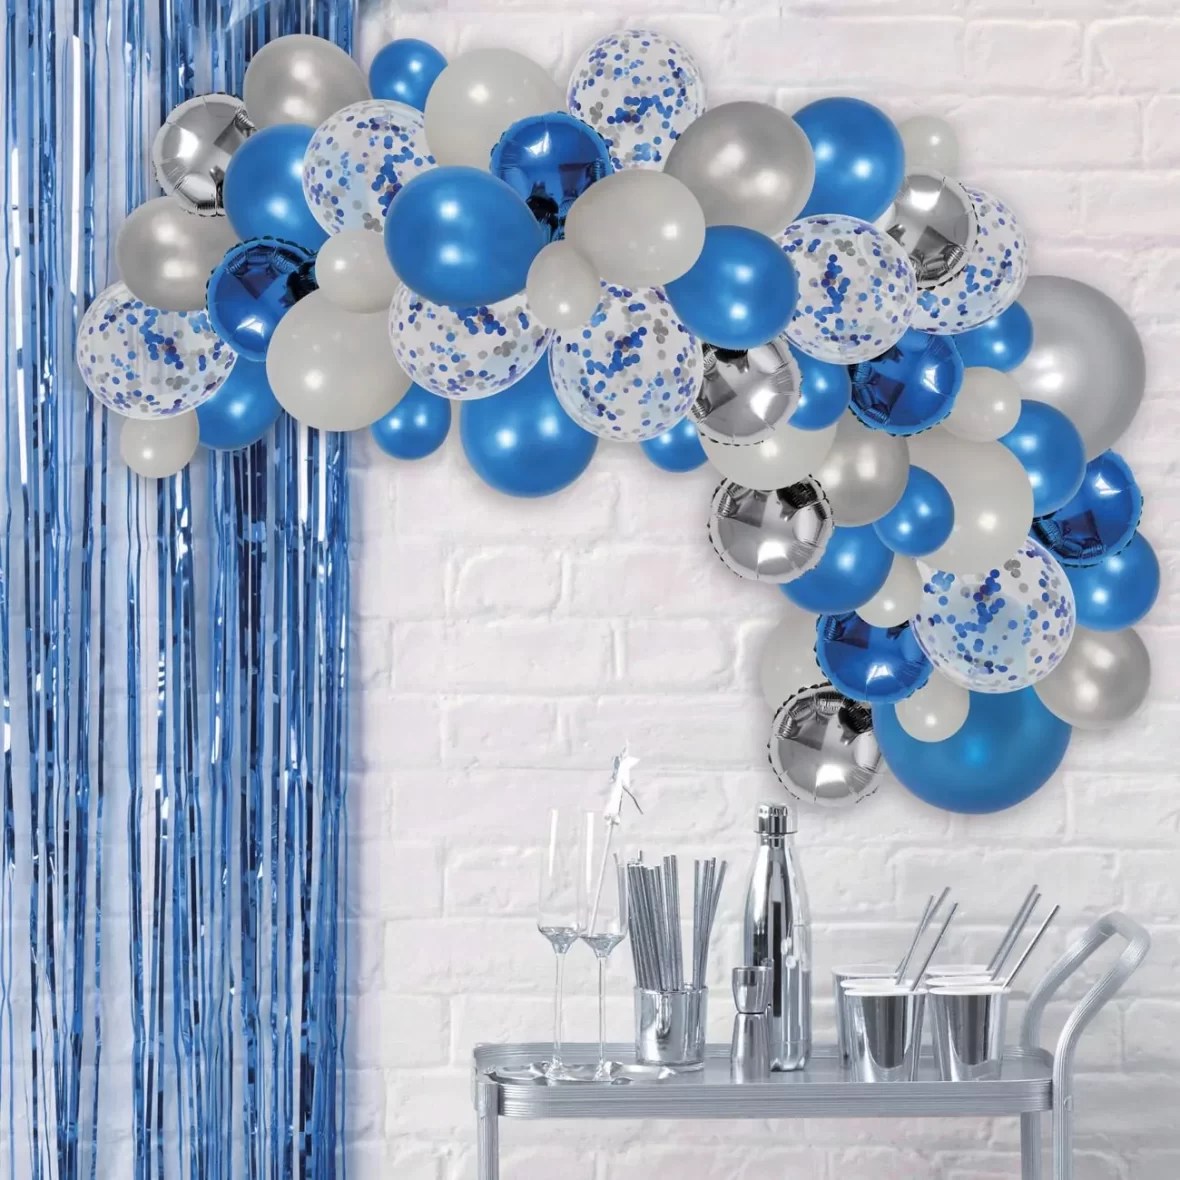 Arcada baloane aniversare petrecere, culori albastru, alb, argintiu cu baloane confetti